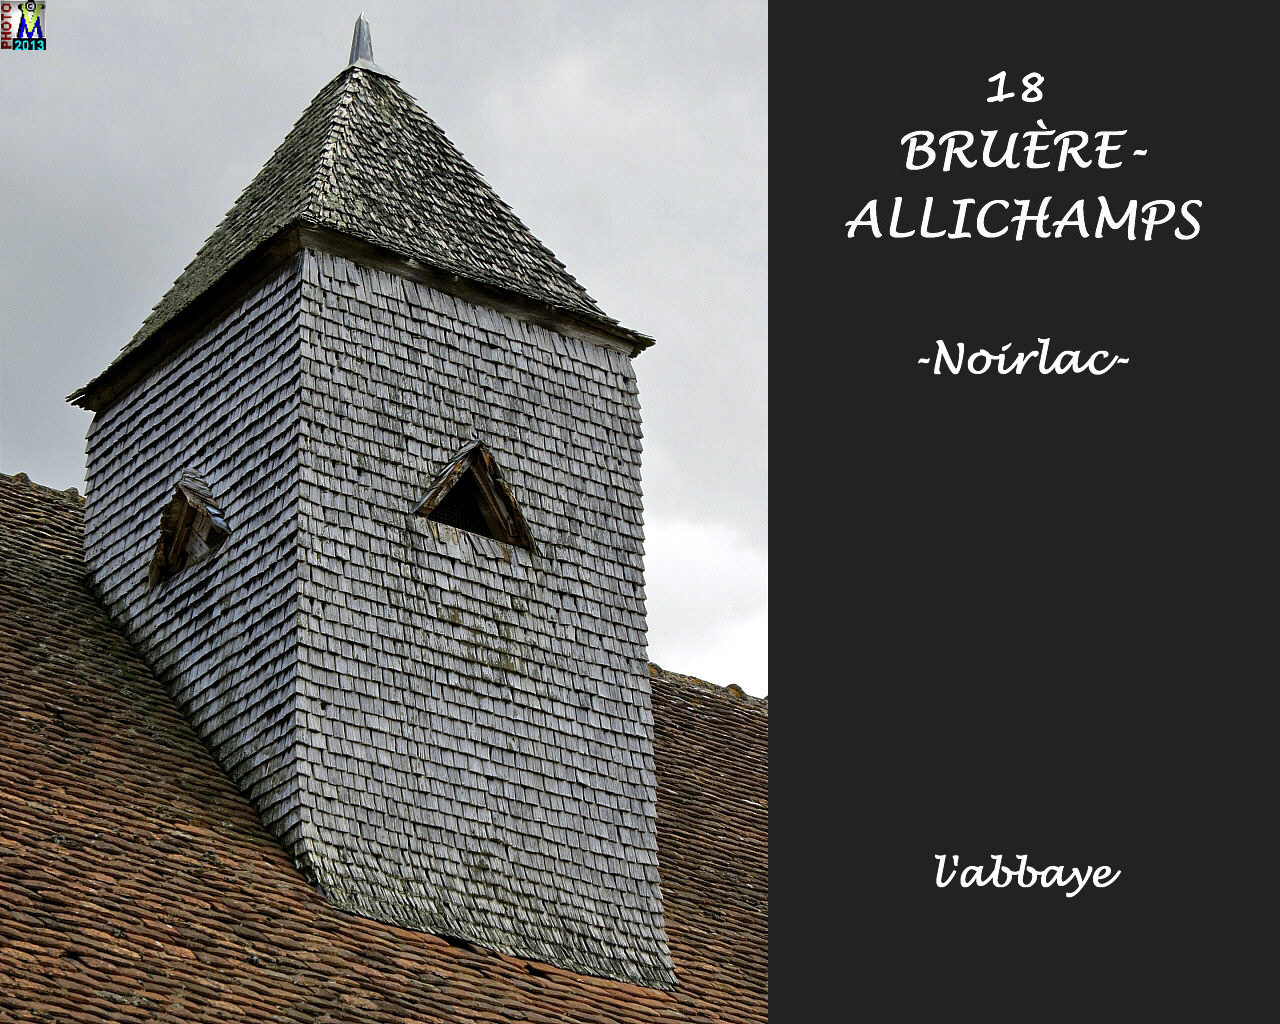 18BRUERE-ALLICHAMPSzNOIRLAC_abbaye_136.jpg